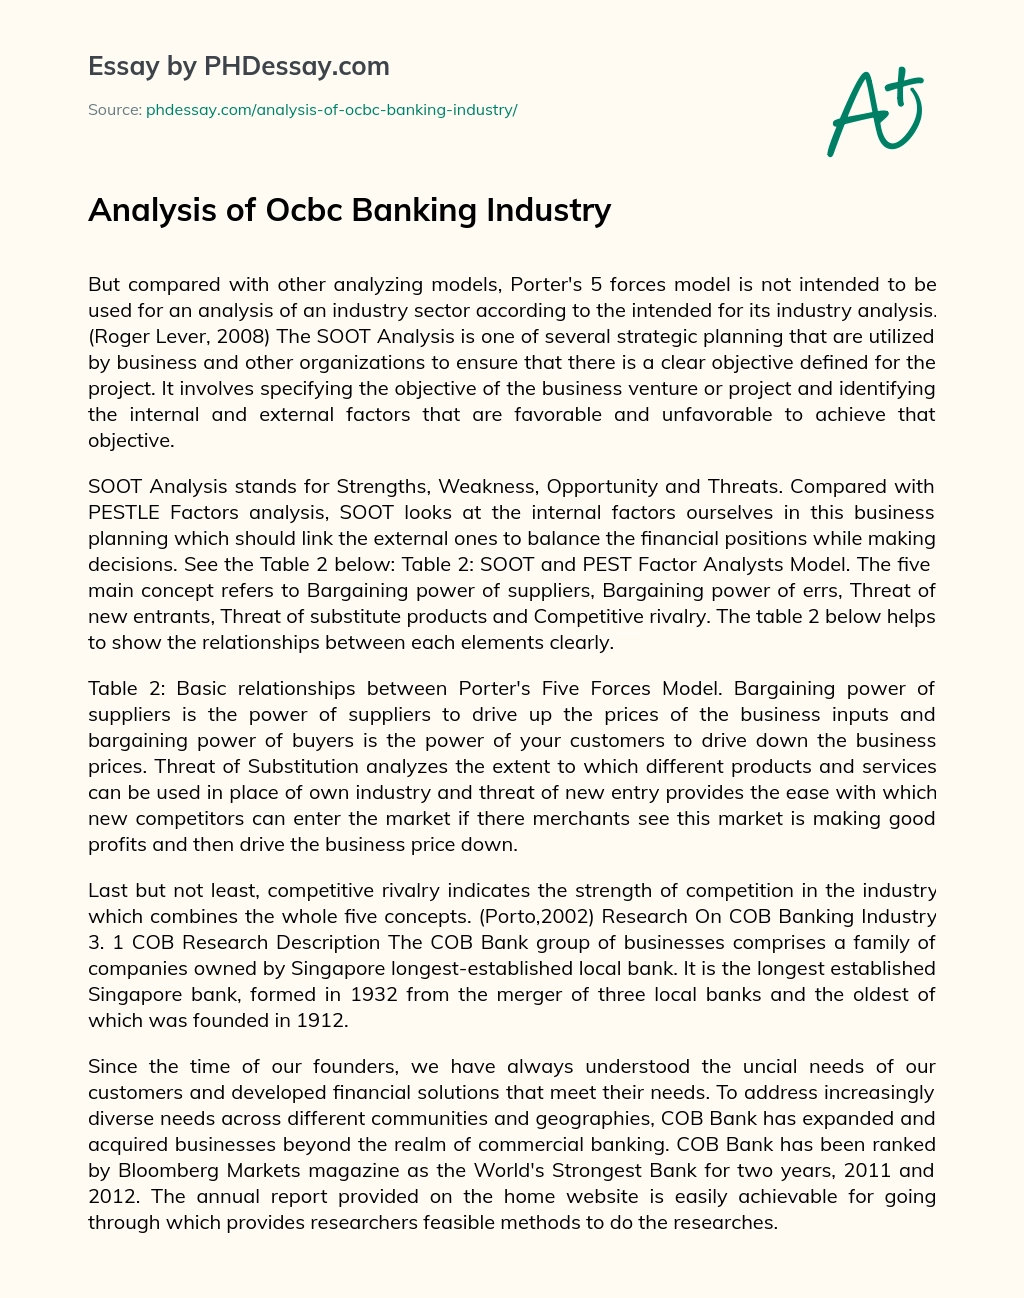 Analysis of Ocbc Banking Industry essay